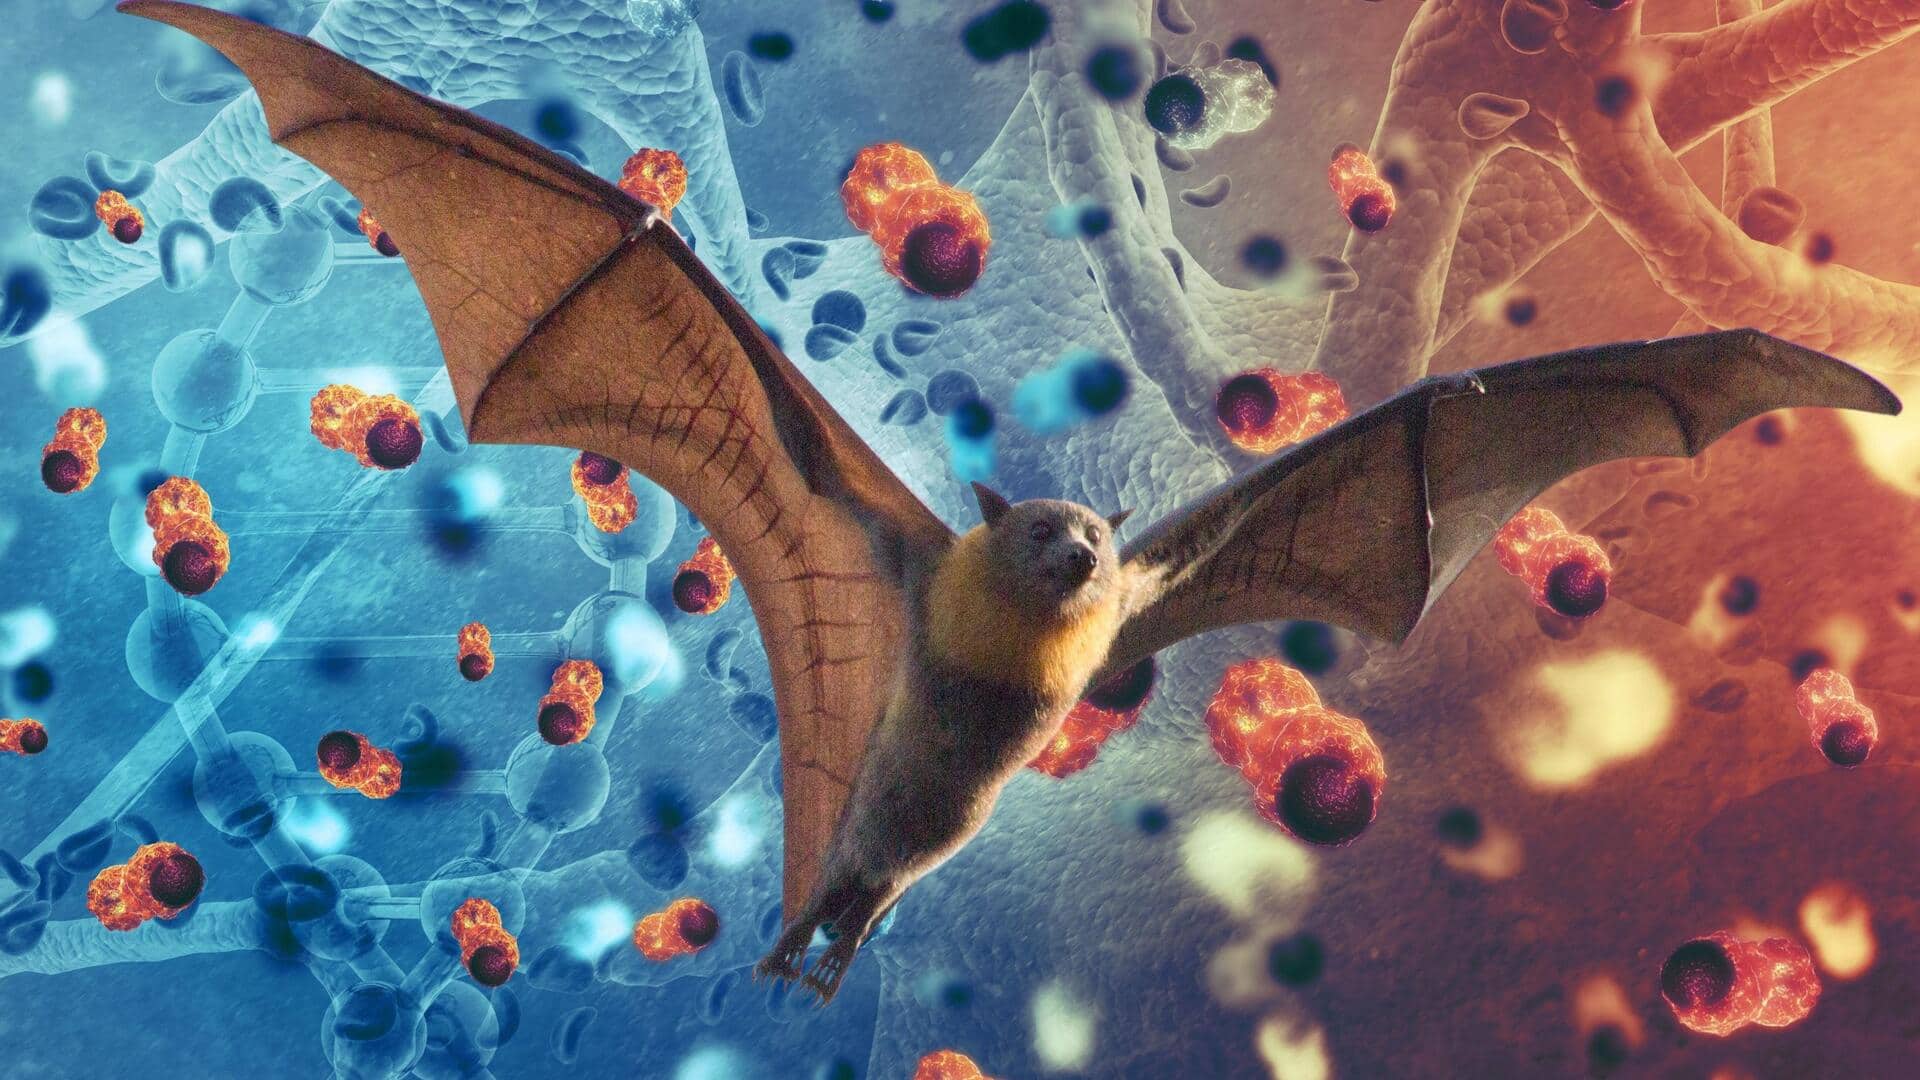 Bat Virus: గబ్బిలాల నుంచి మానవులకు సోకే కొత్త వైరస్ గుర్తింపు